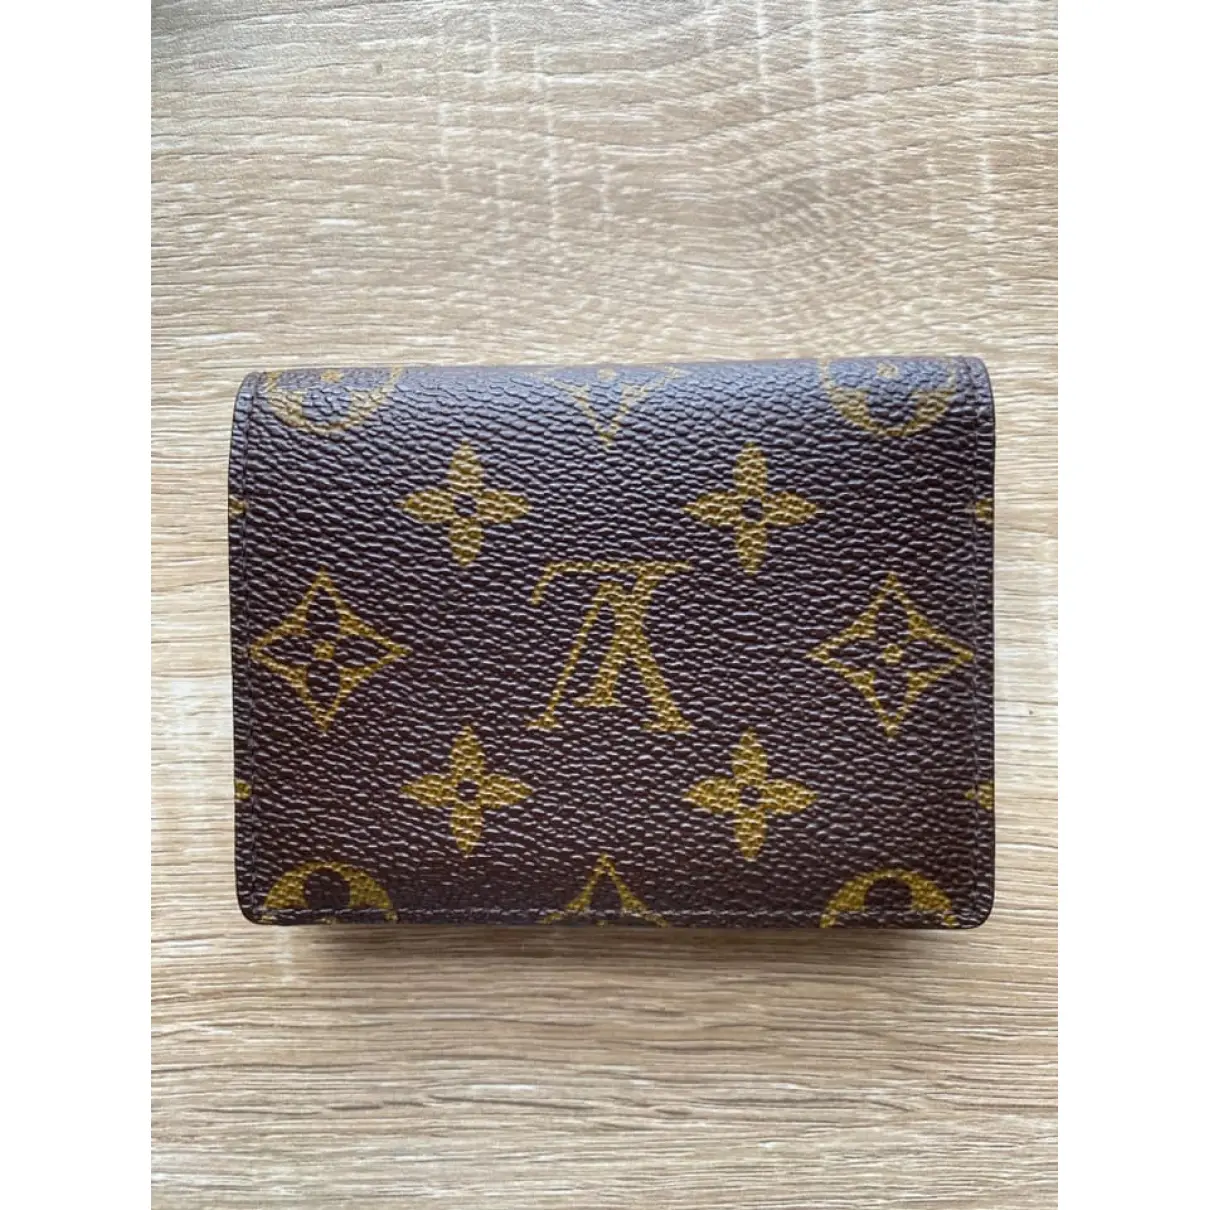 Buy Louis Vuitton Marie cloth wallet online